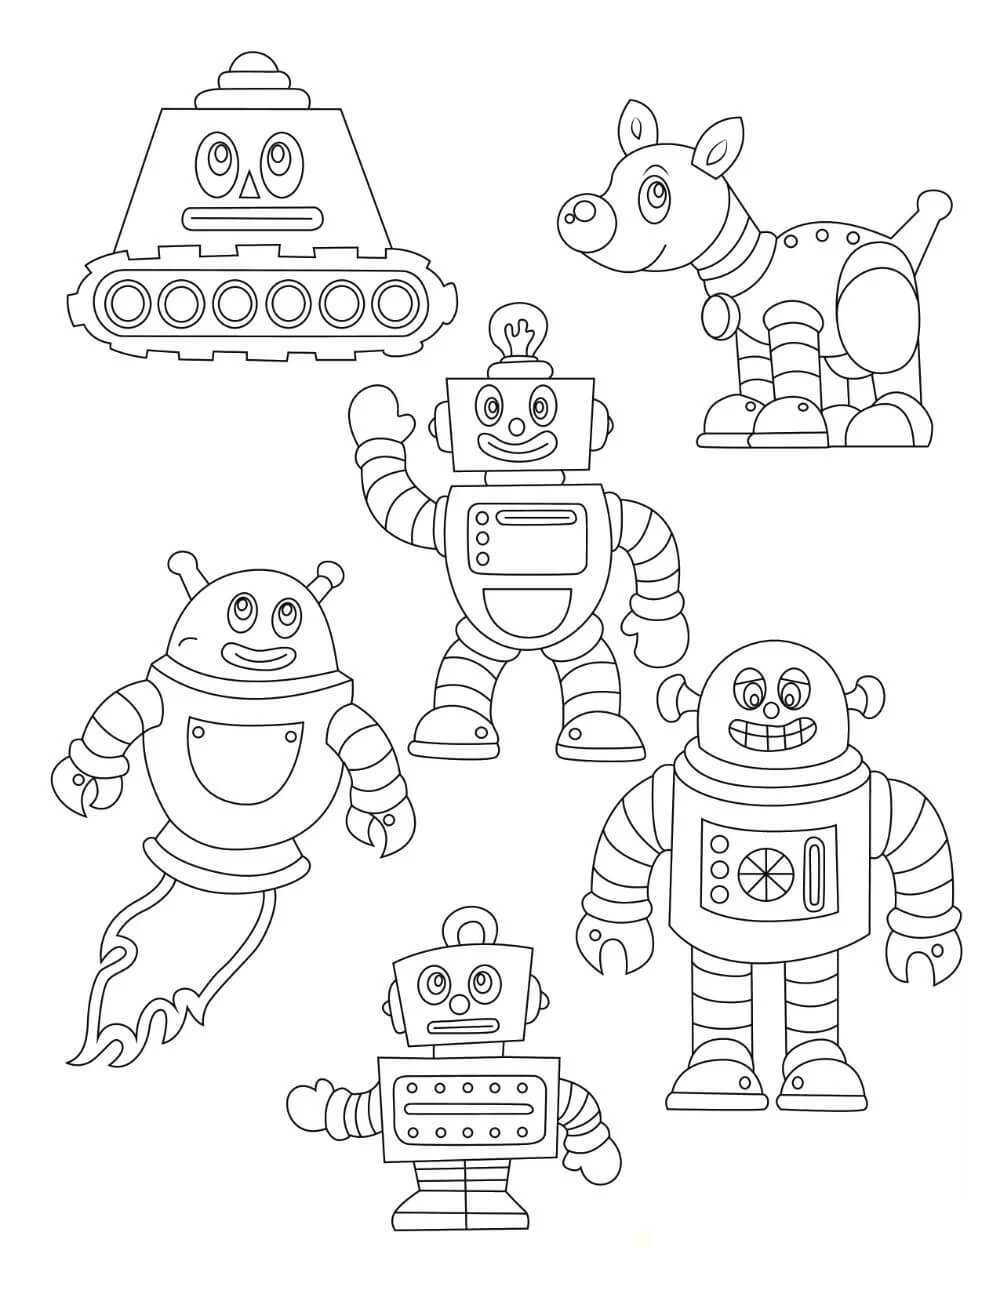 Six robots coloring page